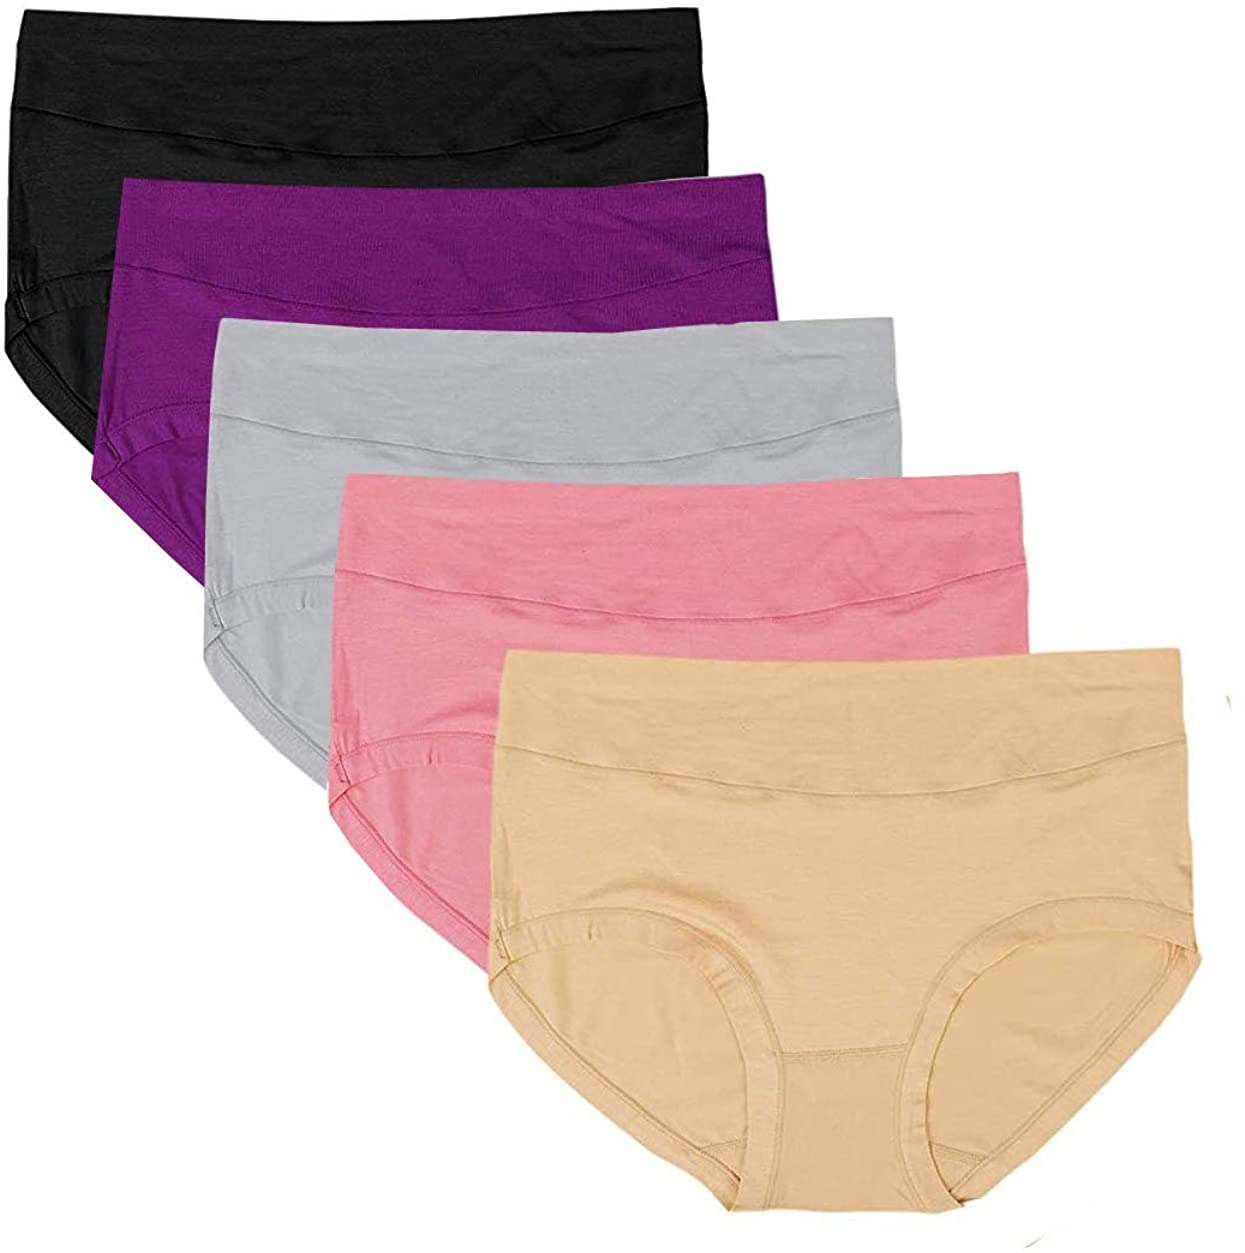 Lashapear Women's Underwear Super Soft Modal Bamboo Fiber Stretchy ...